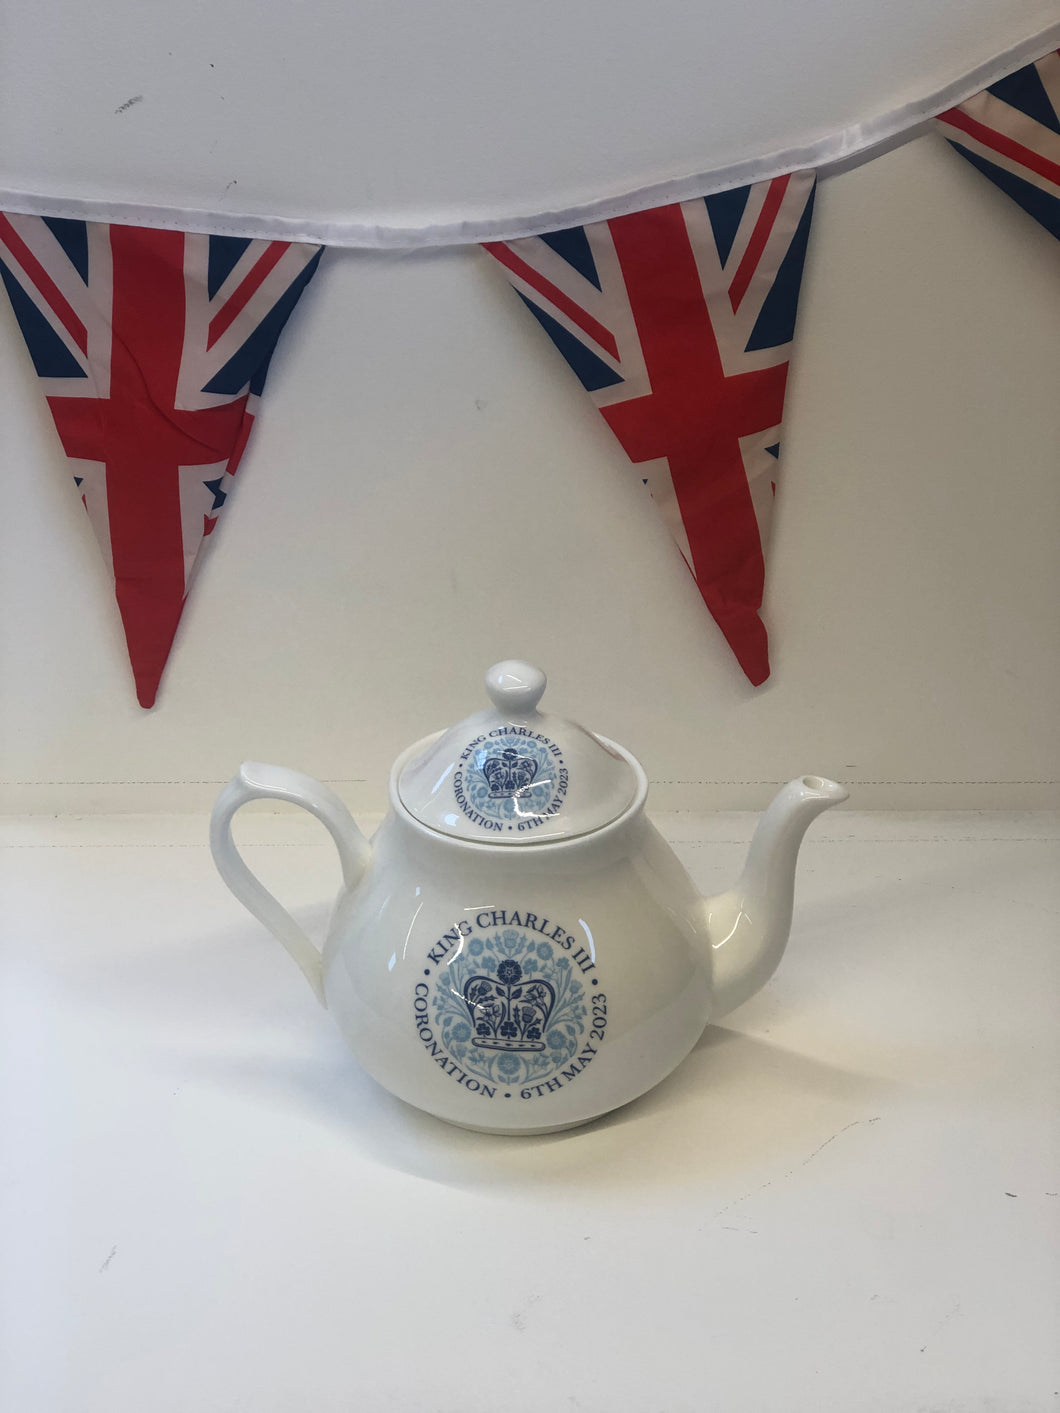 King Charles III Coronation tea pot for four people made in fine bone china